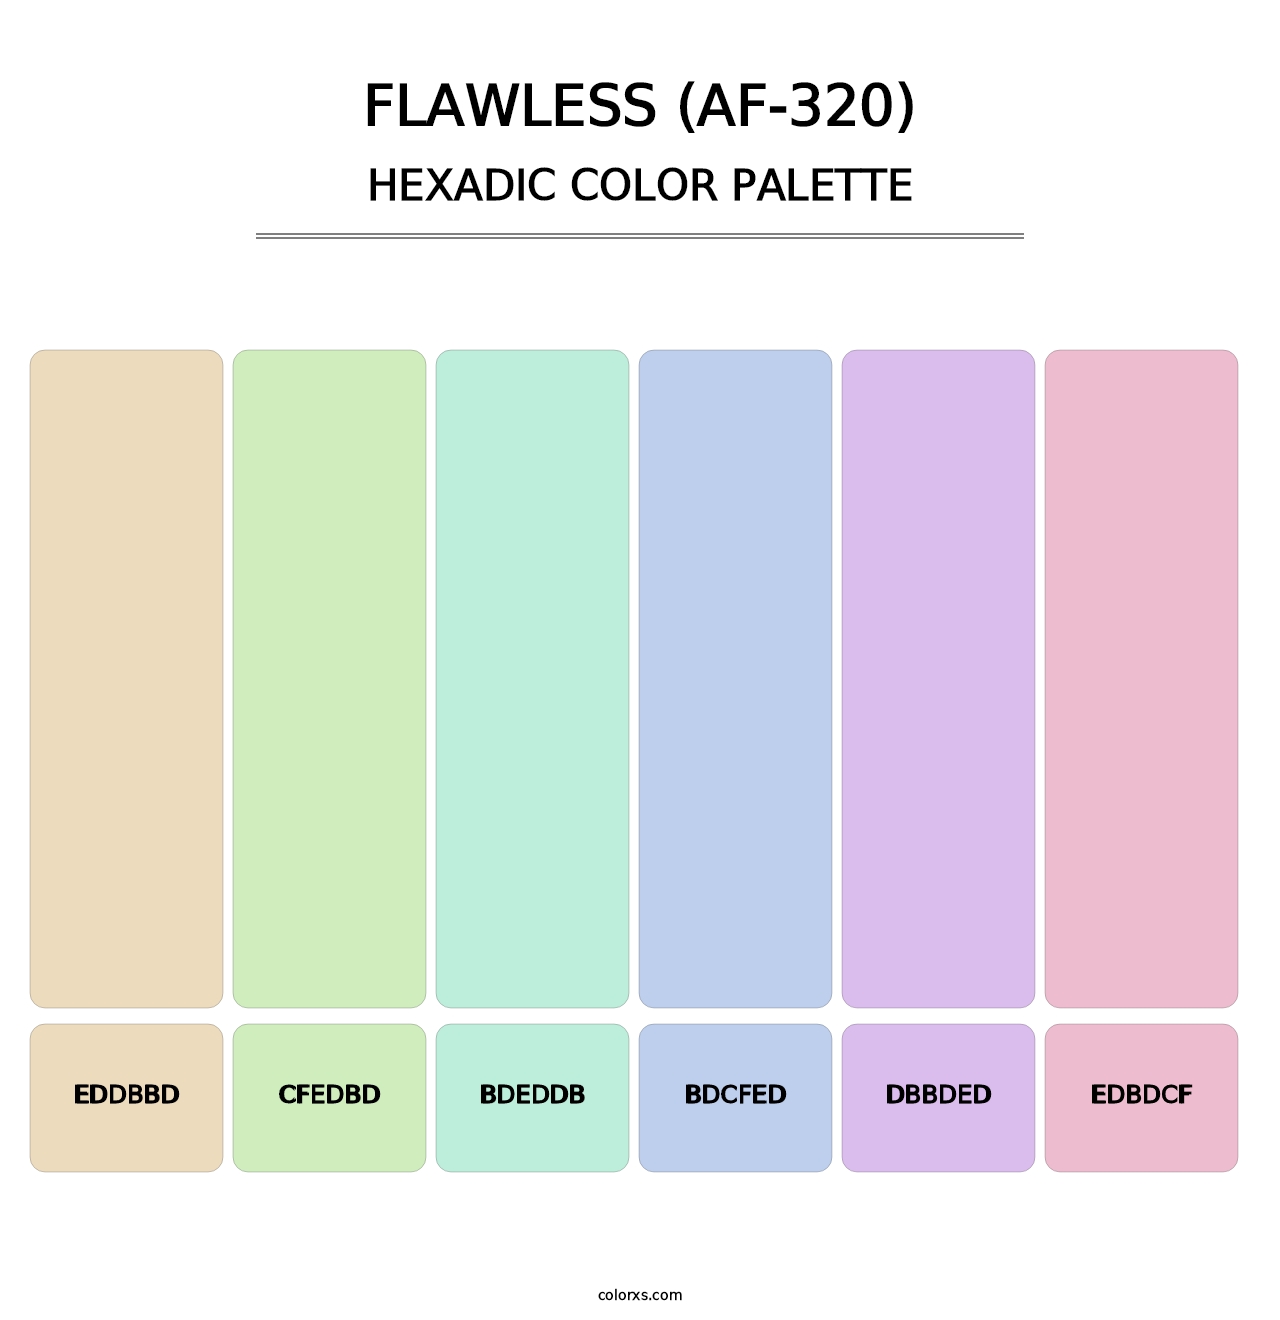 Flawless (AF-320) - Hexadic Color Palette